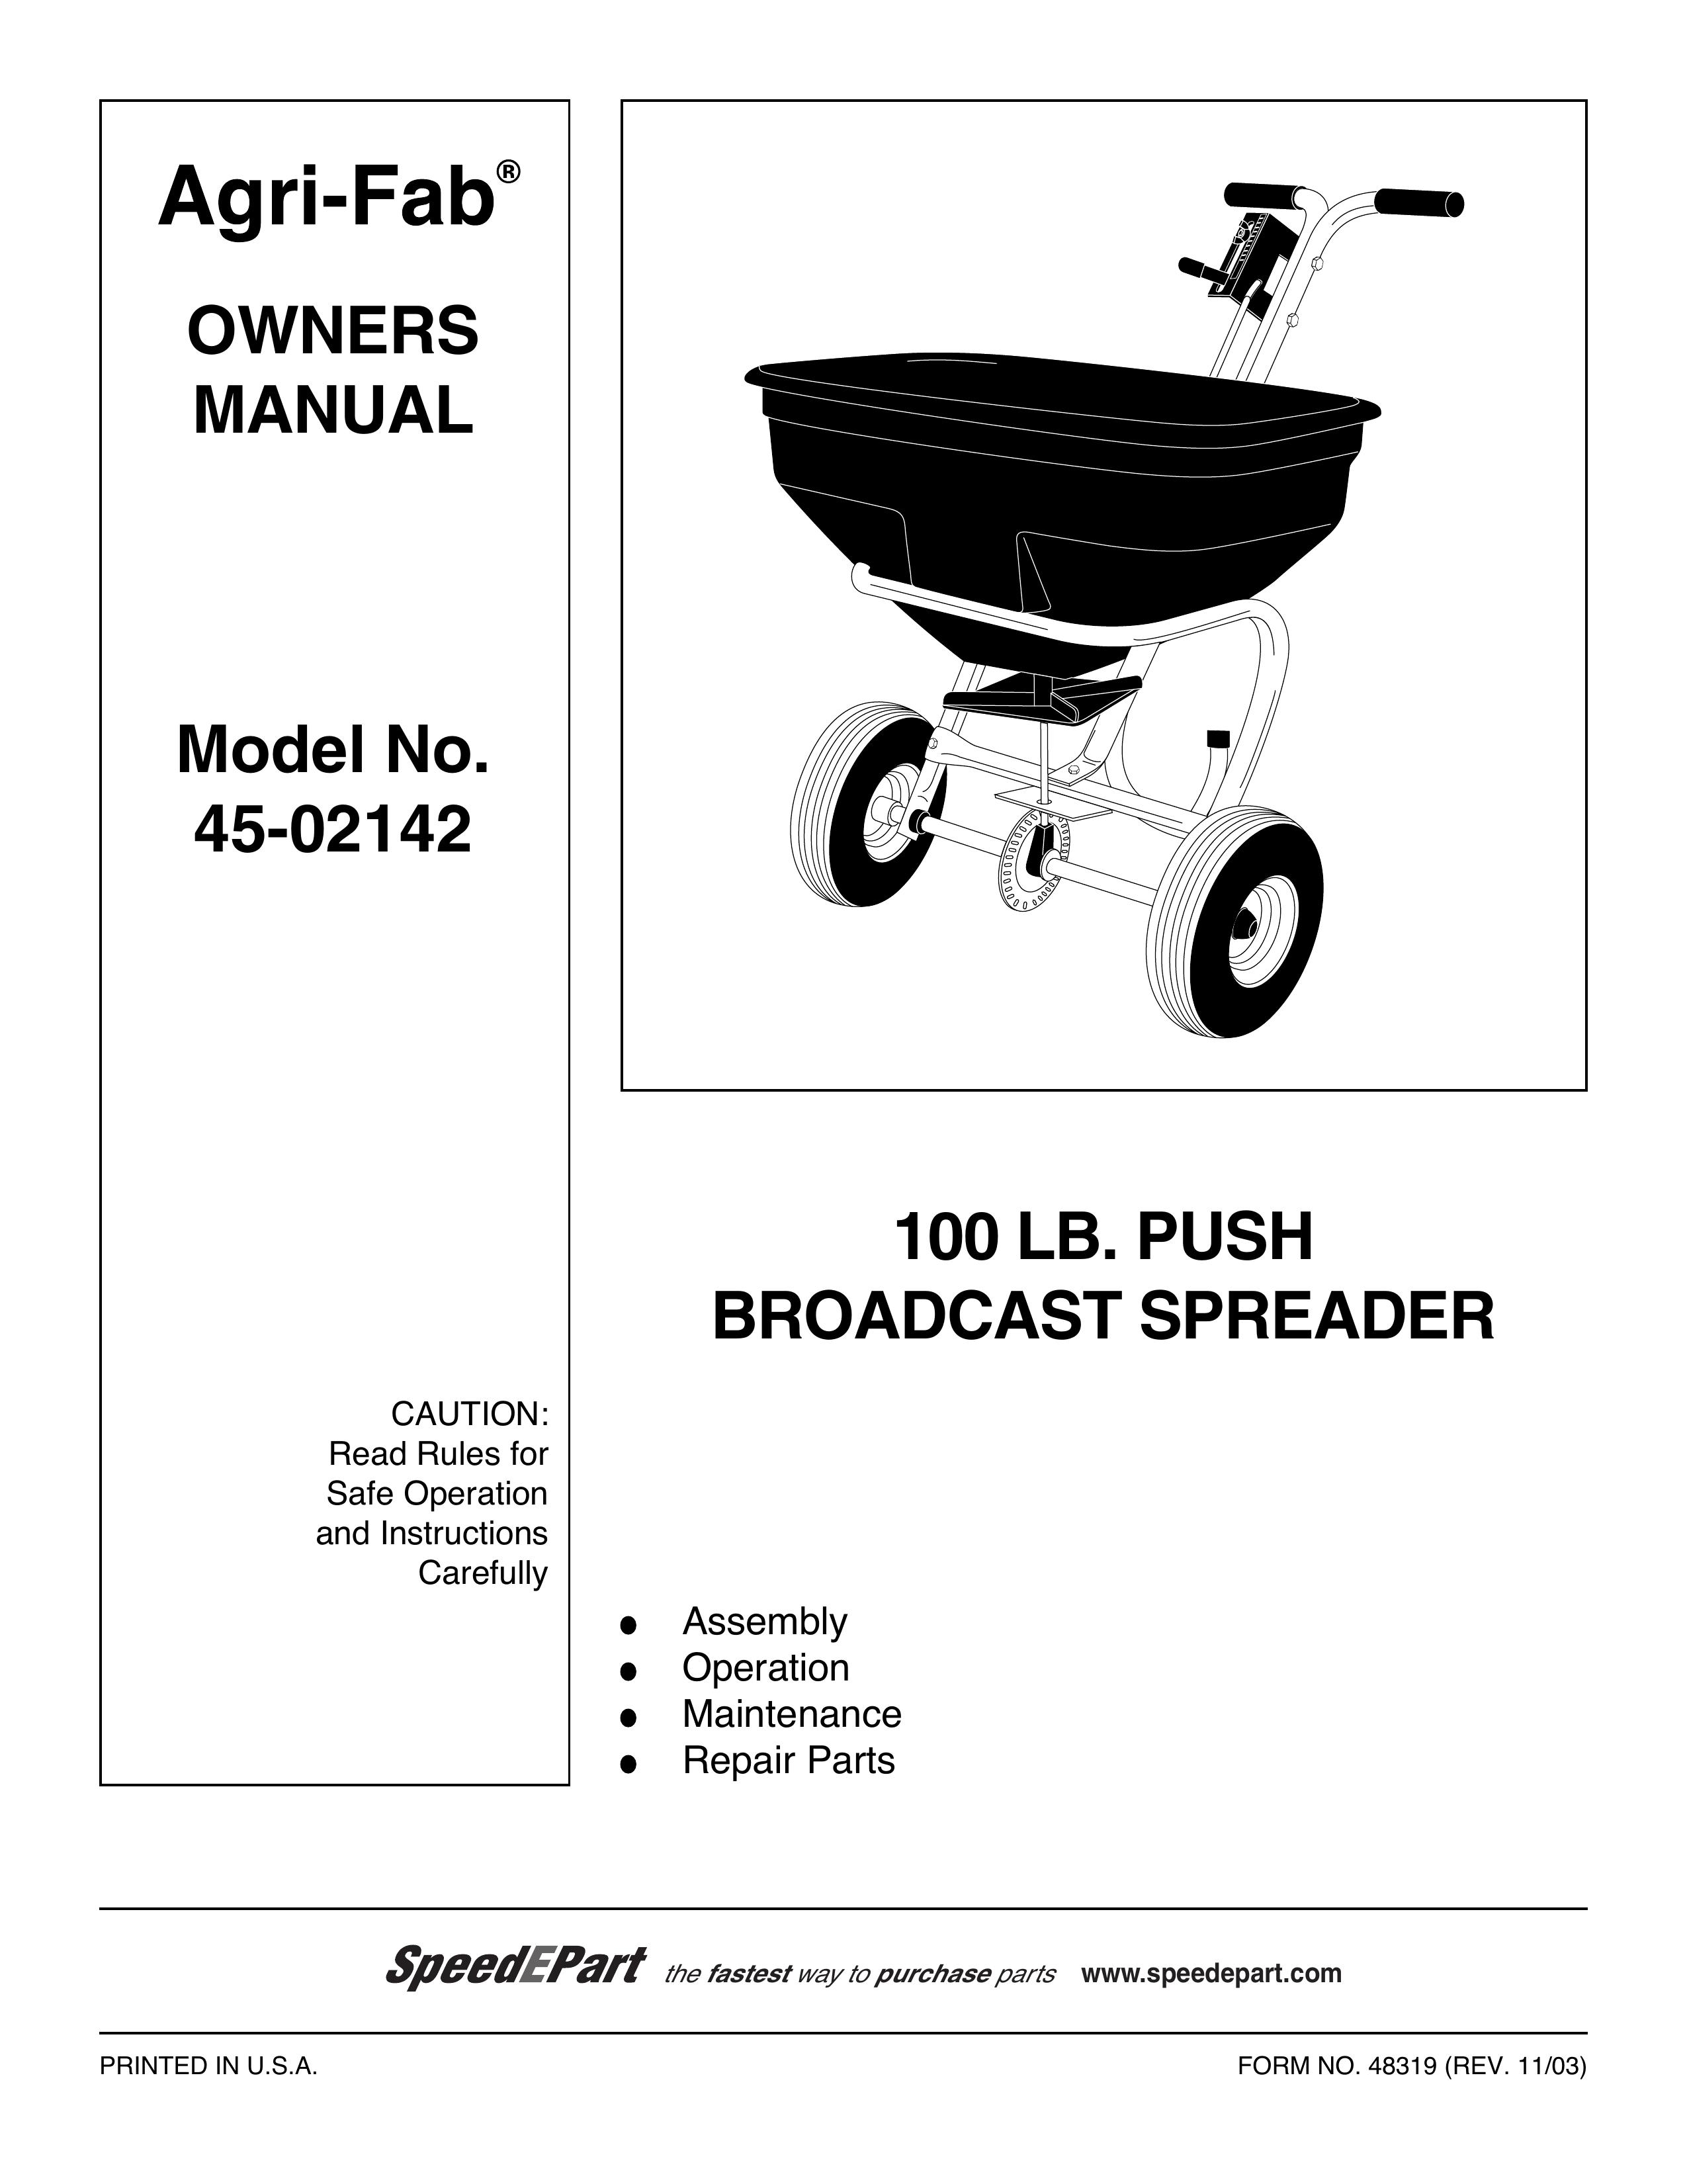 Agri-Fab 45-02142 Spreader User Manual